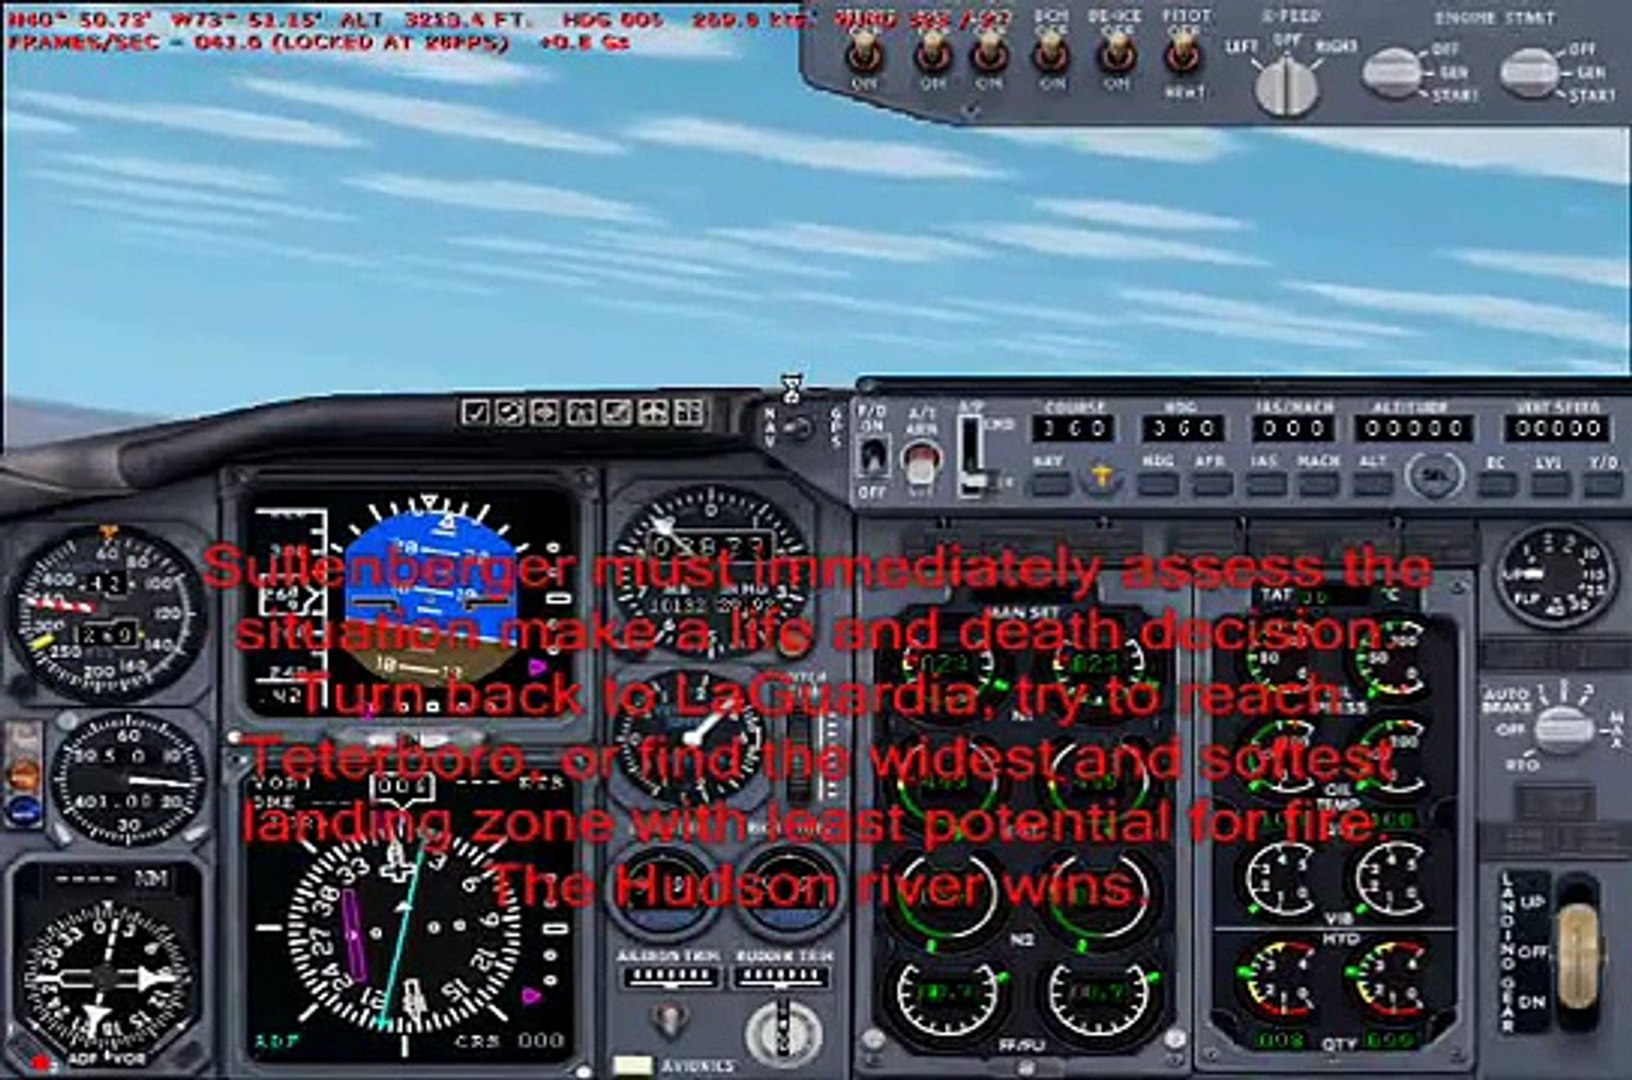 Flight 1549 Simulation